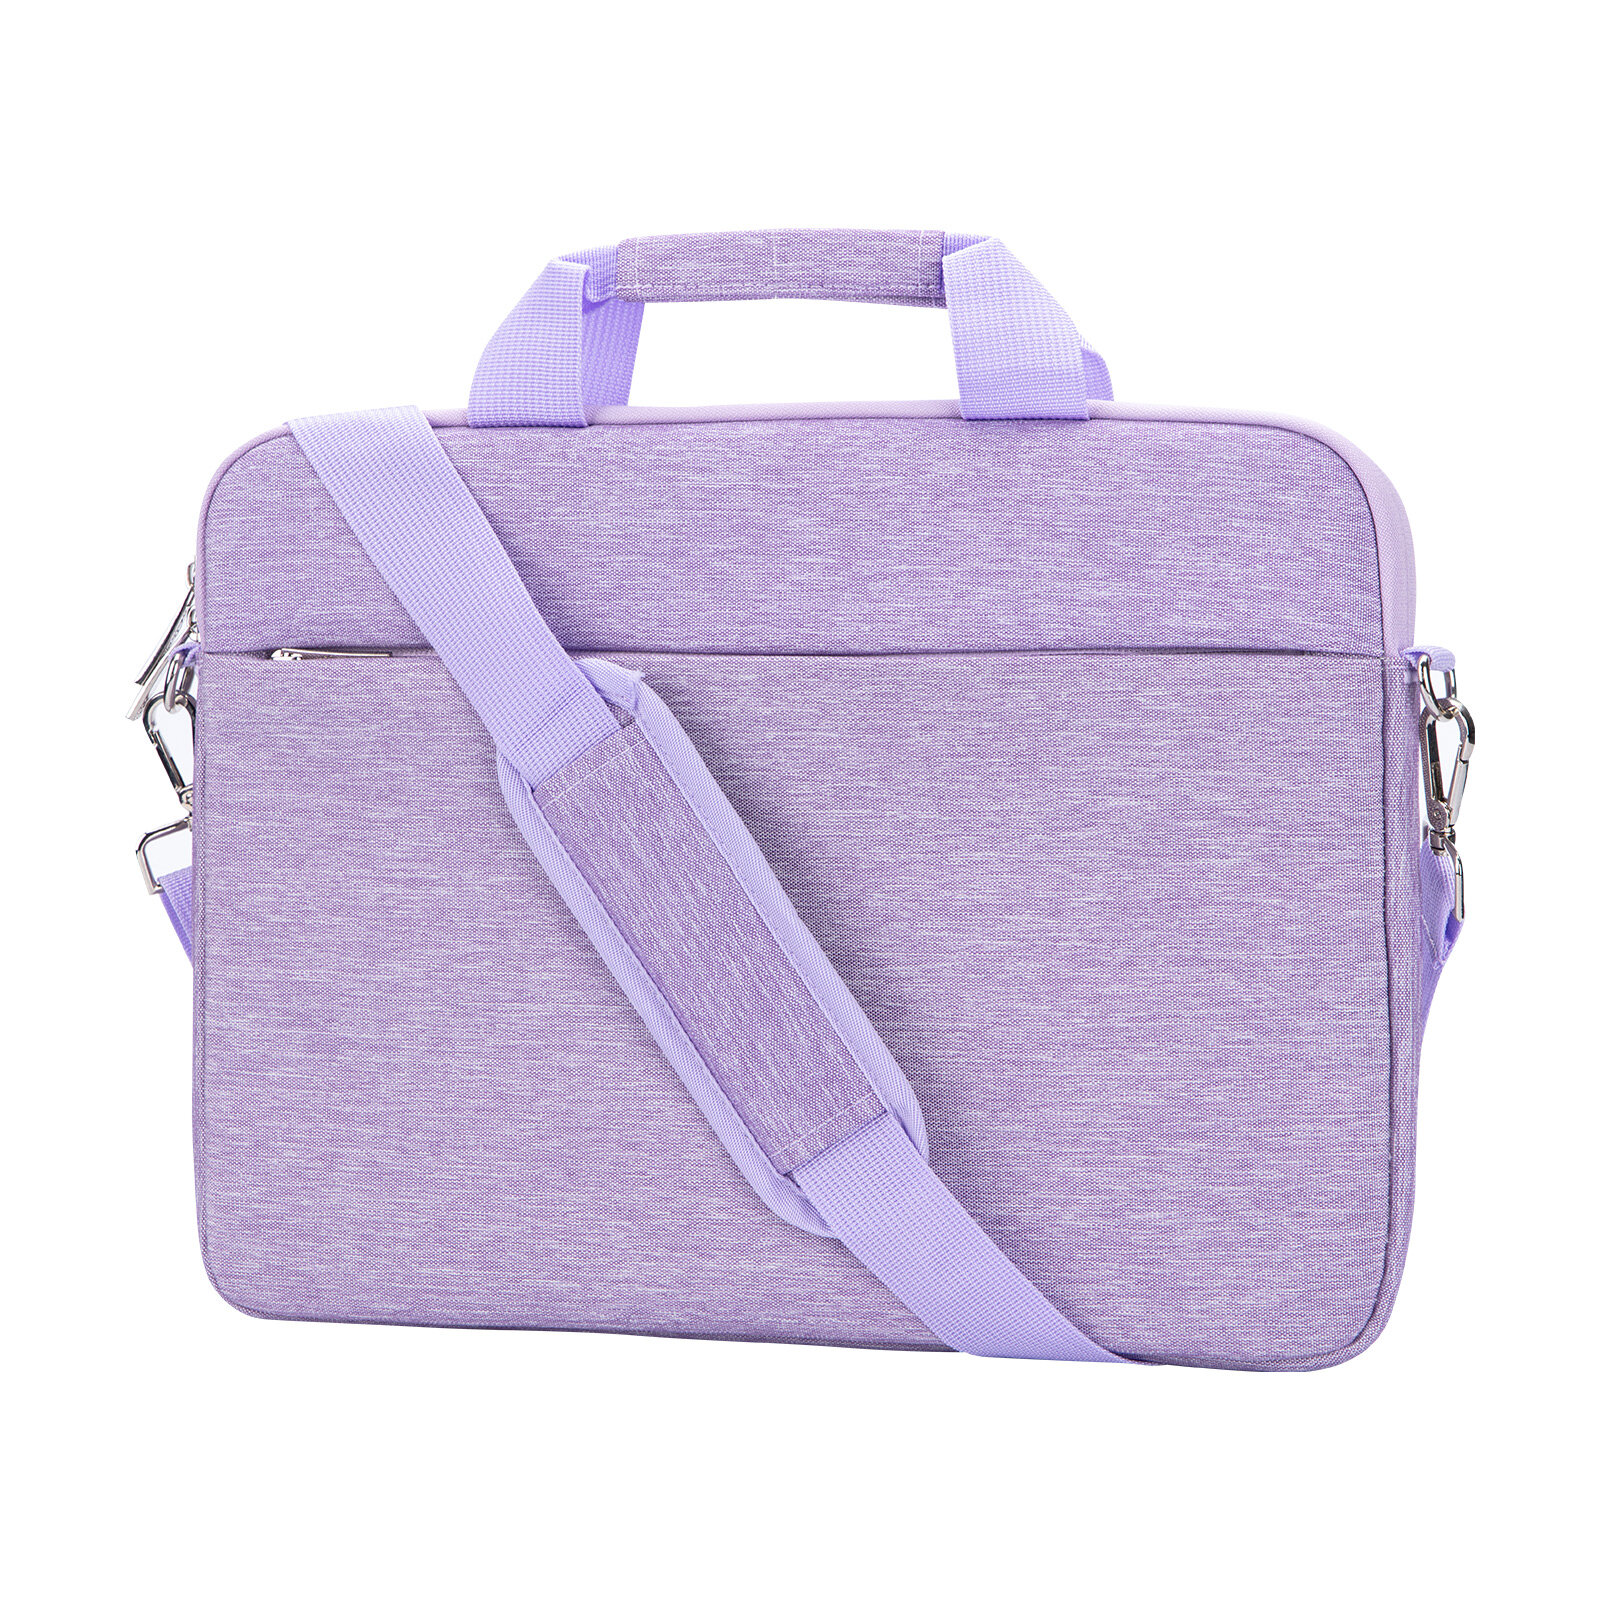 AtailorBird 13.3/14/15.6 Inch Laptop Sleeve Bag Tablet Bag Travel Handbag For iPad Macbook Laptop Notebook Tablet